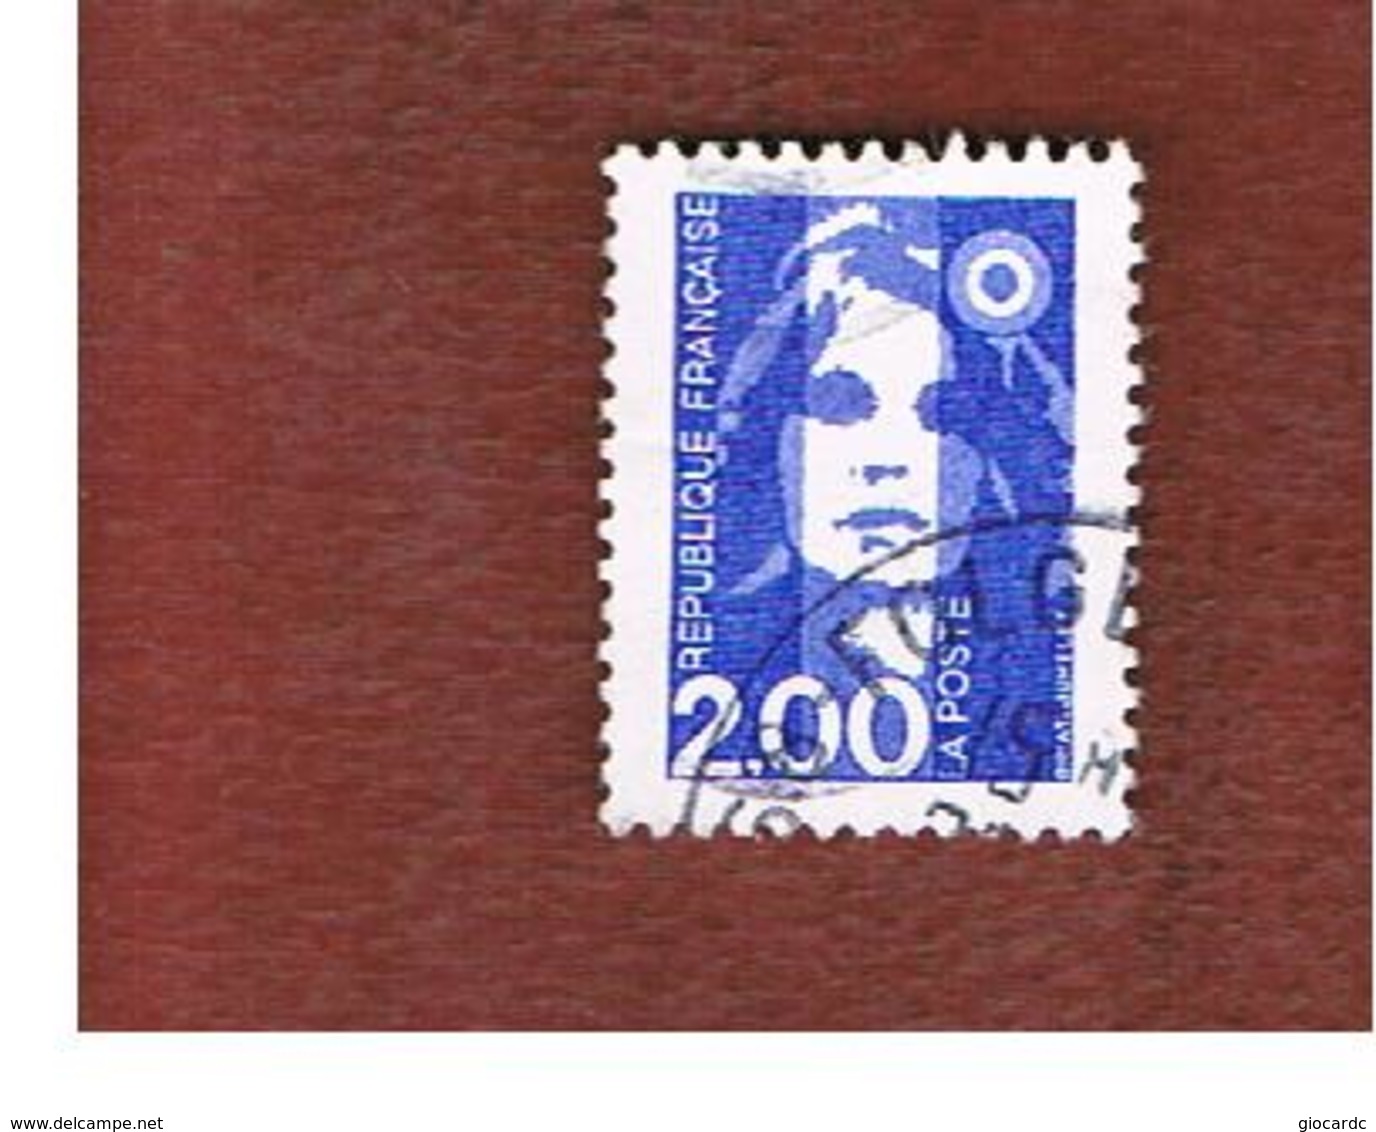 FRANCIA (FRANCE) - SG 2912 - 1994  MARIANNE OF BRIAT  2,00 BLUE   -    USED - Usati